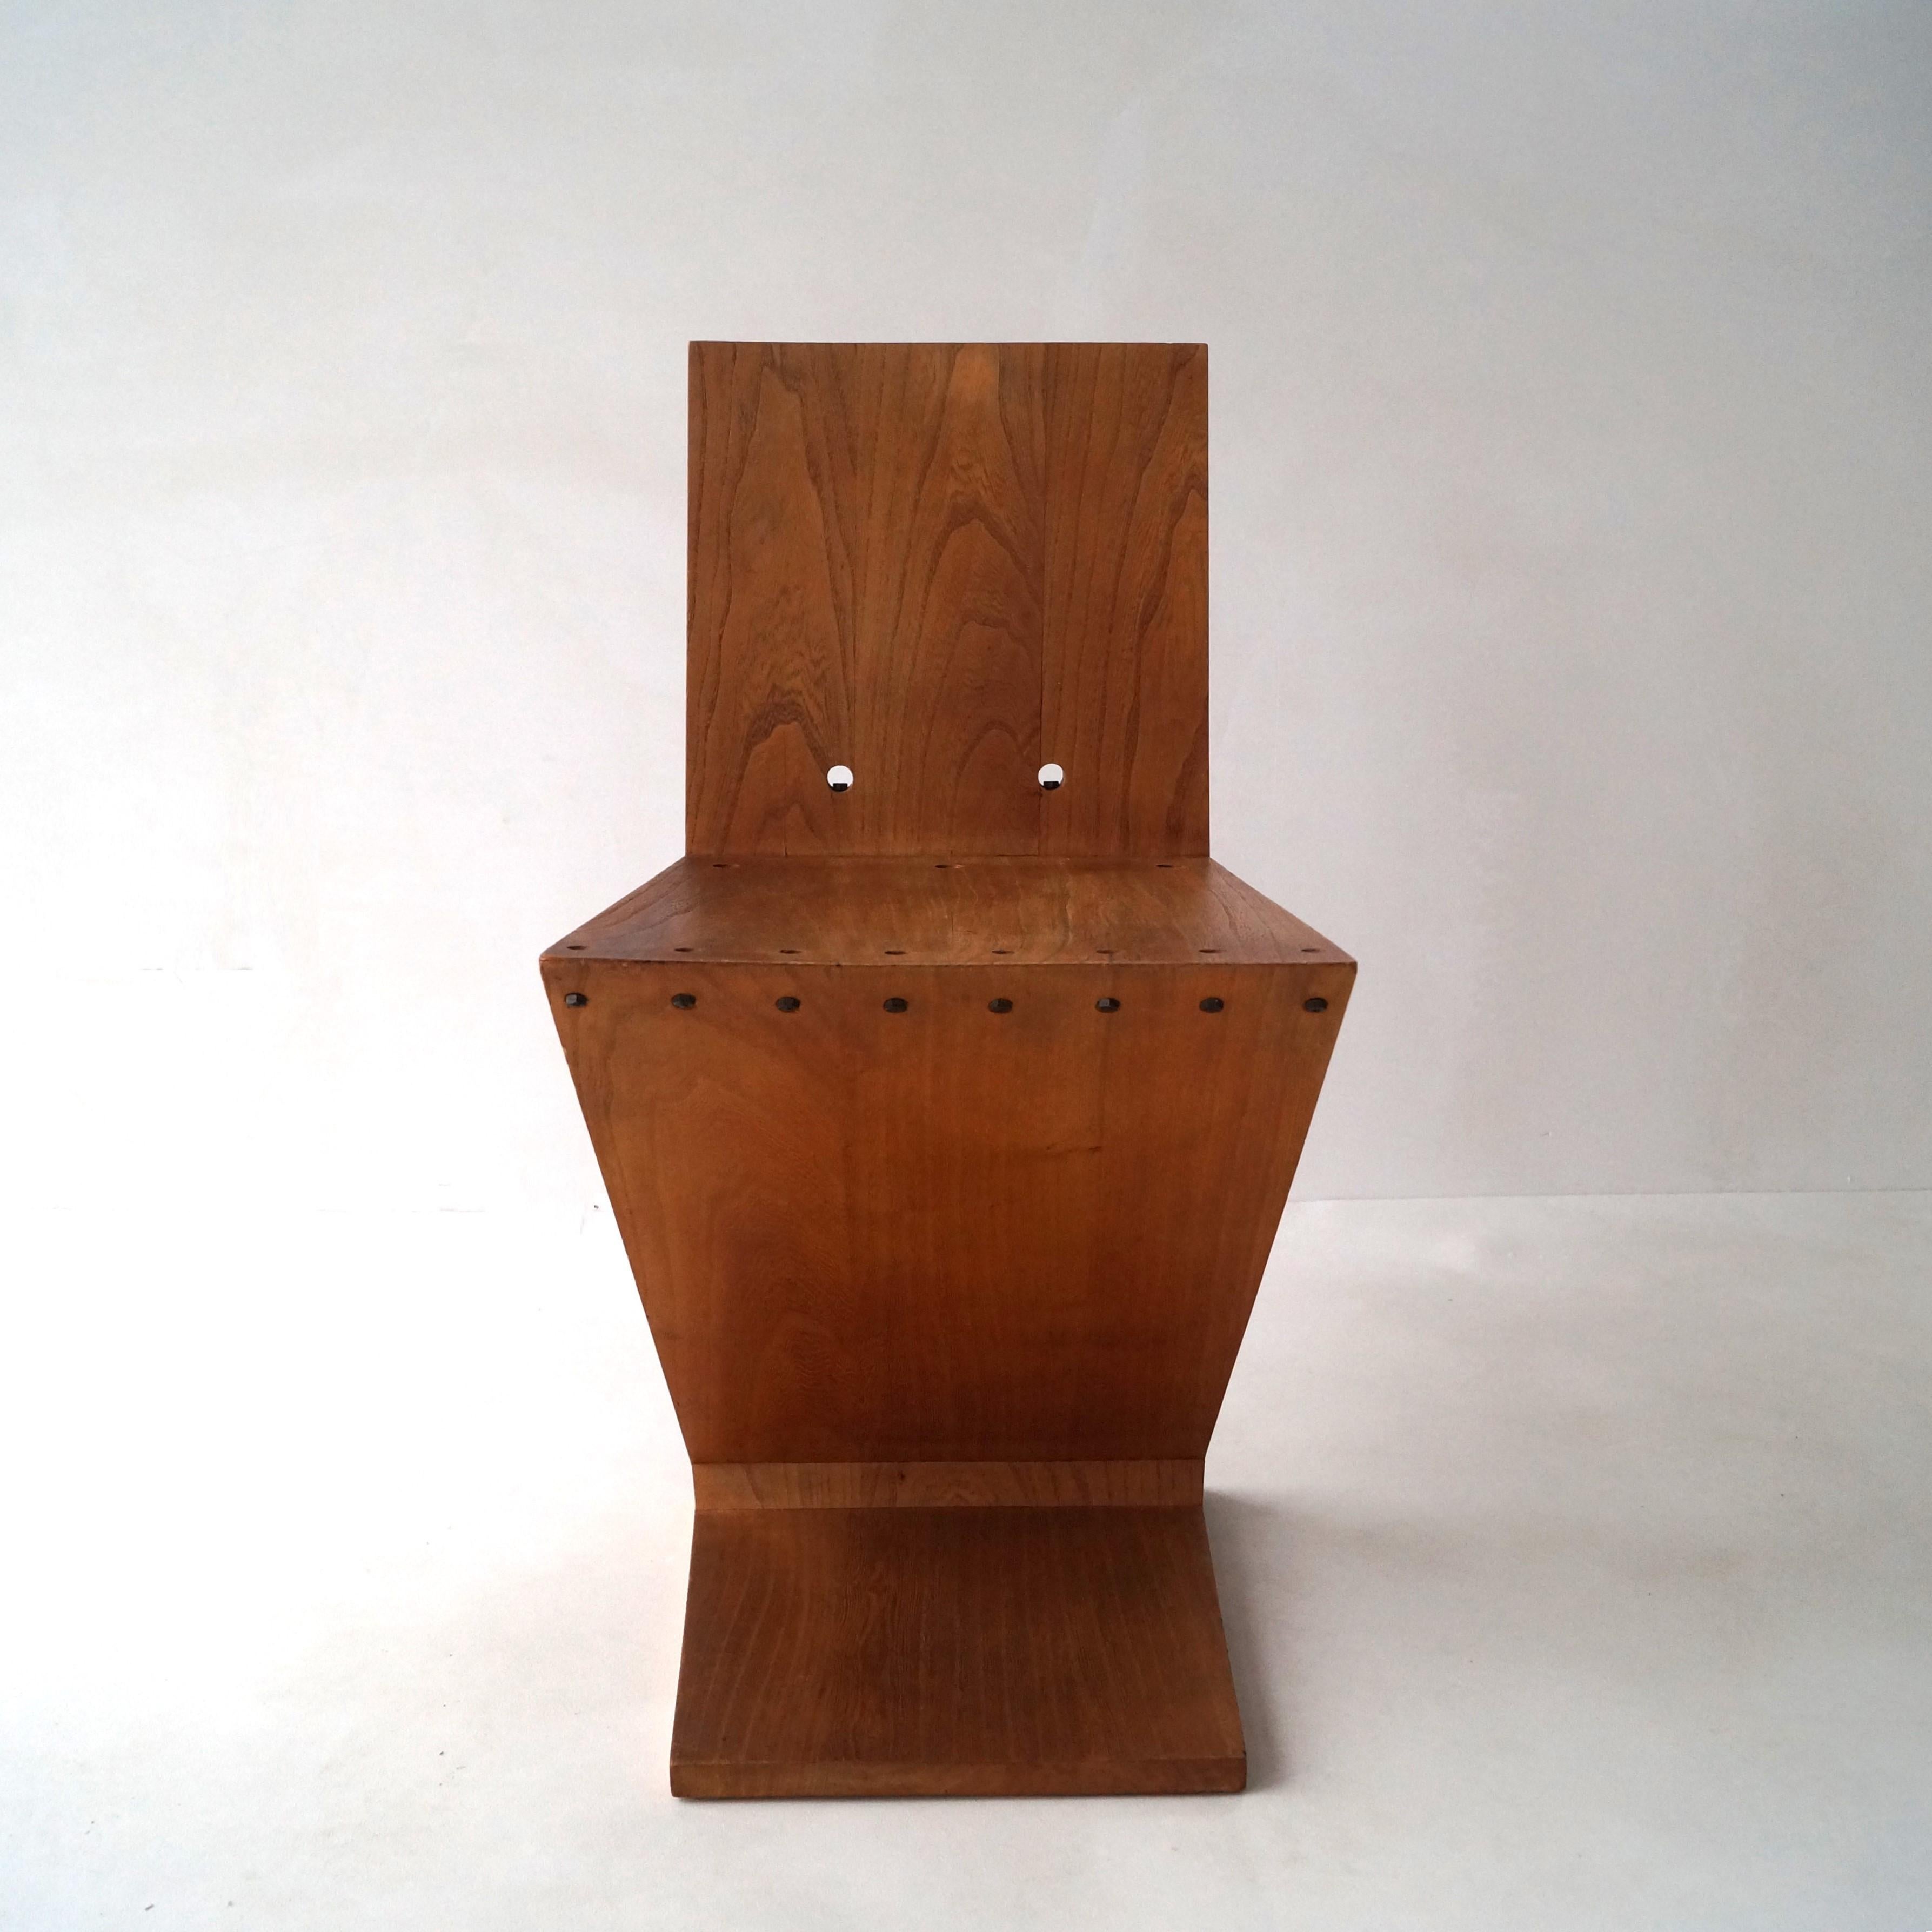 Elm Gerrit Rietveld Zig Zag chair by G.A. van de Groenekan, late 1950s